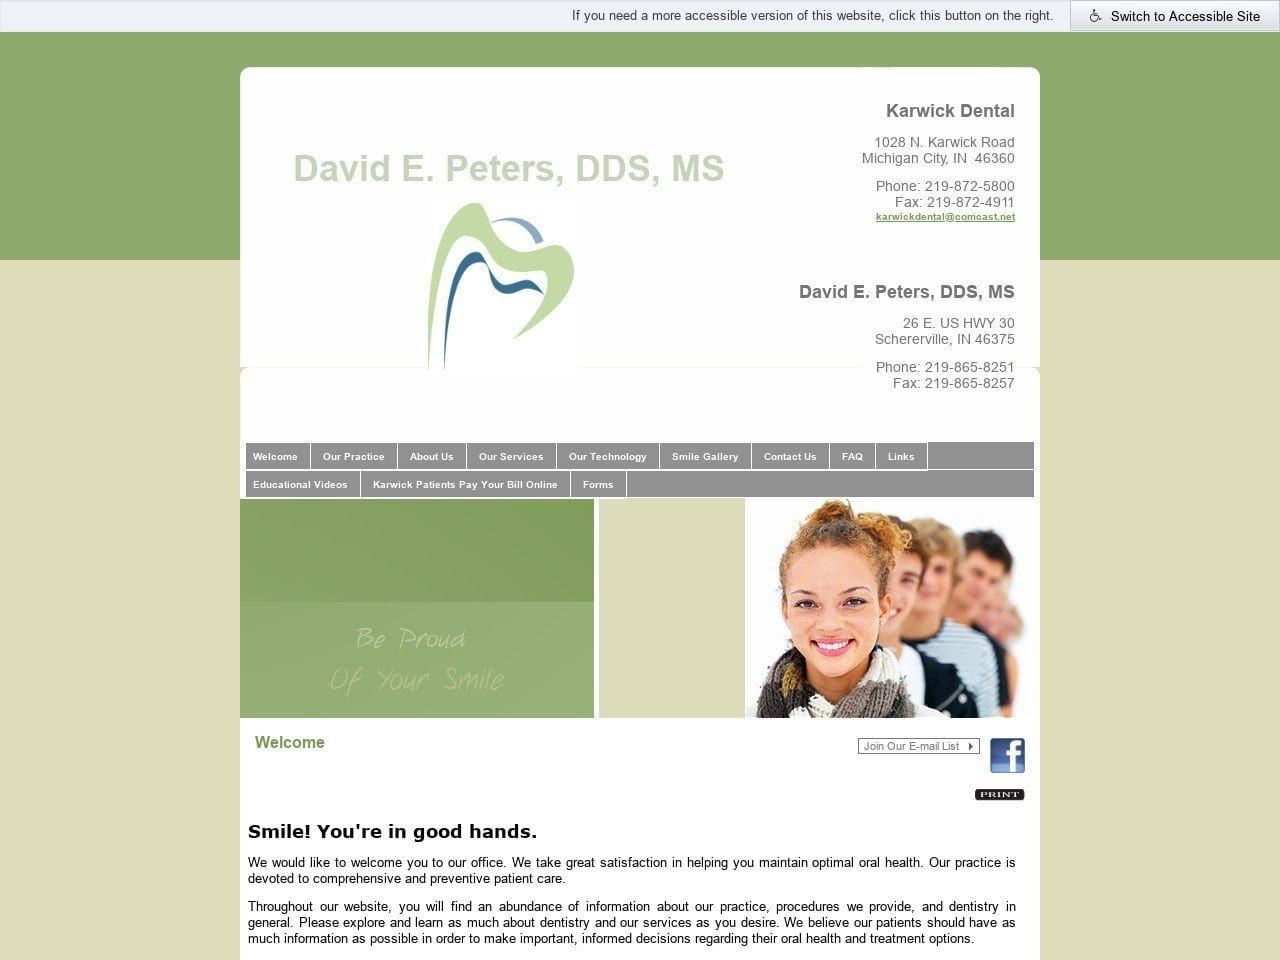 Karwick Dental Offices Website Screenshot from karwickdental.com